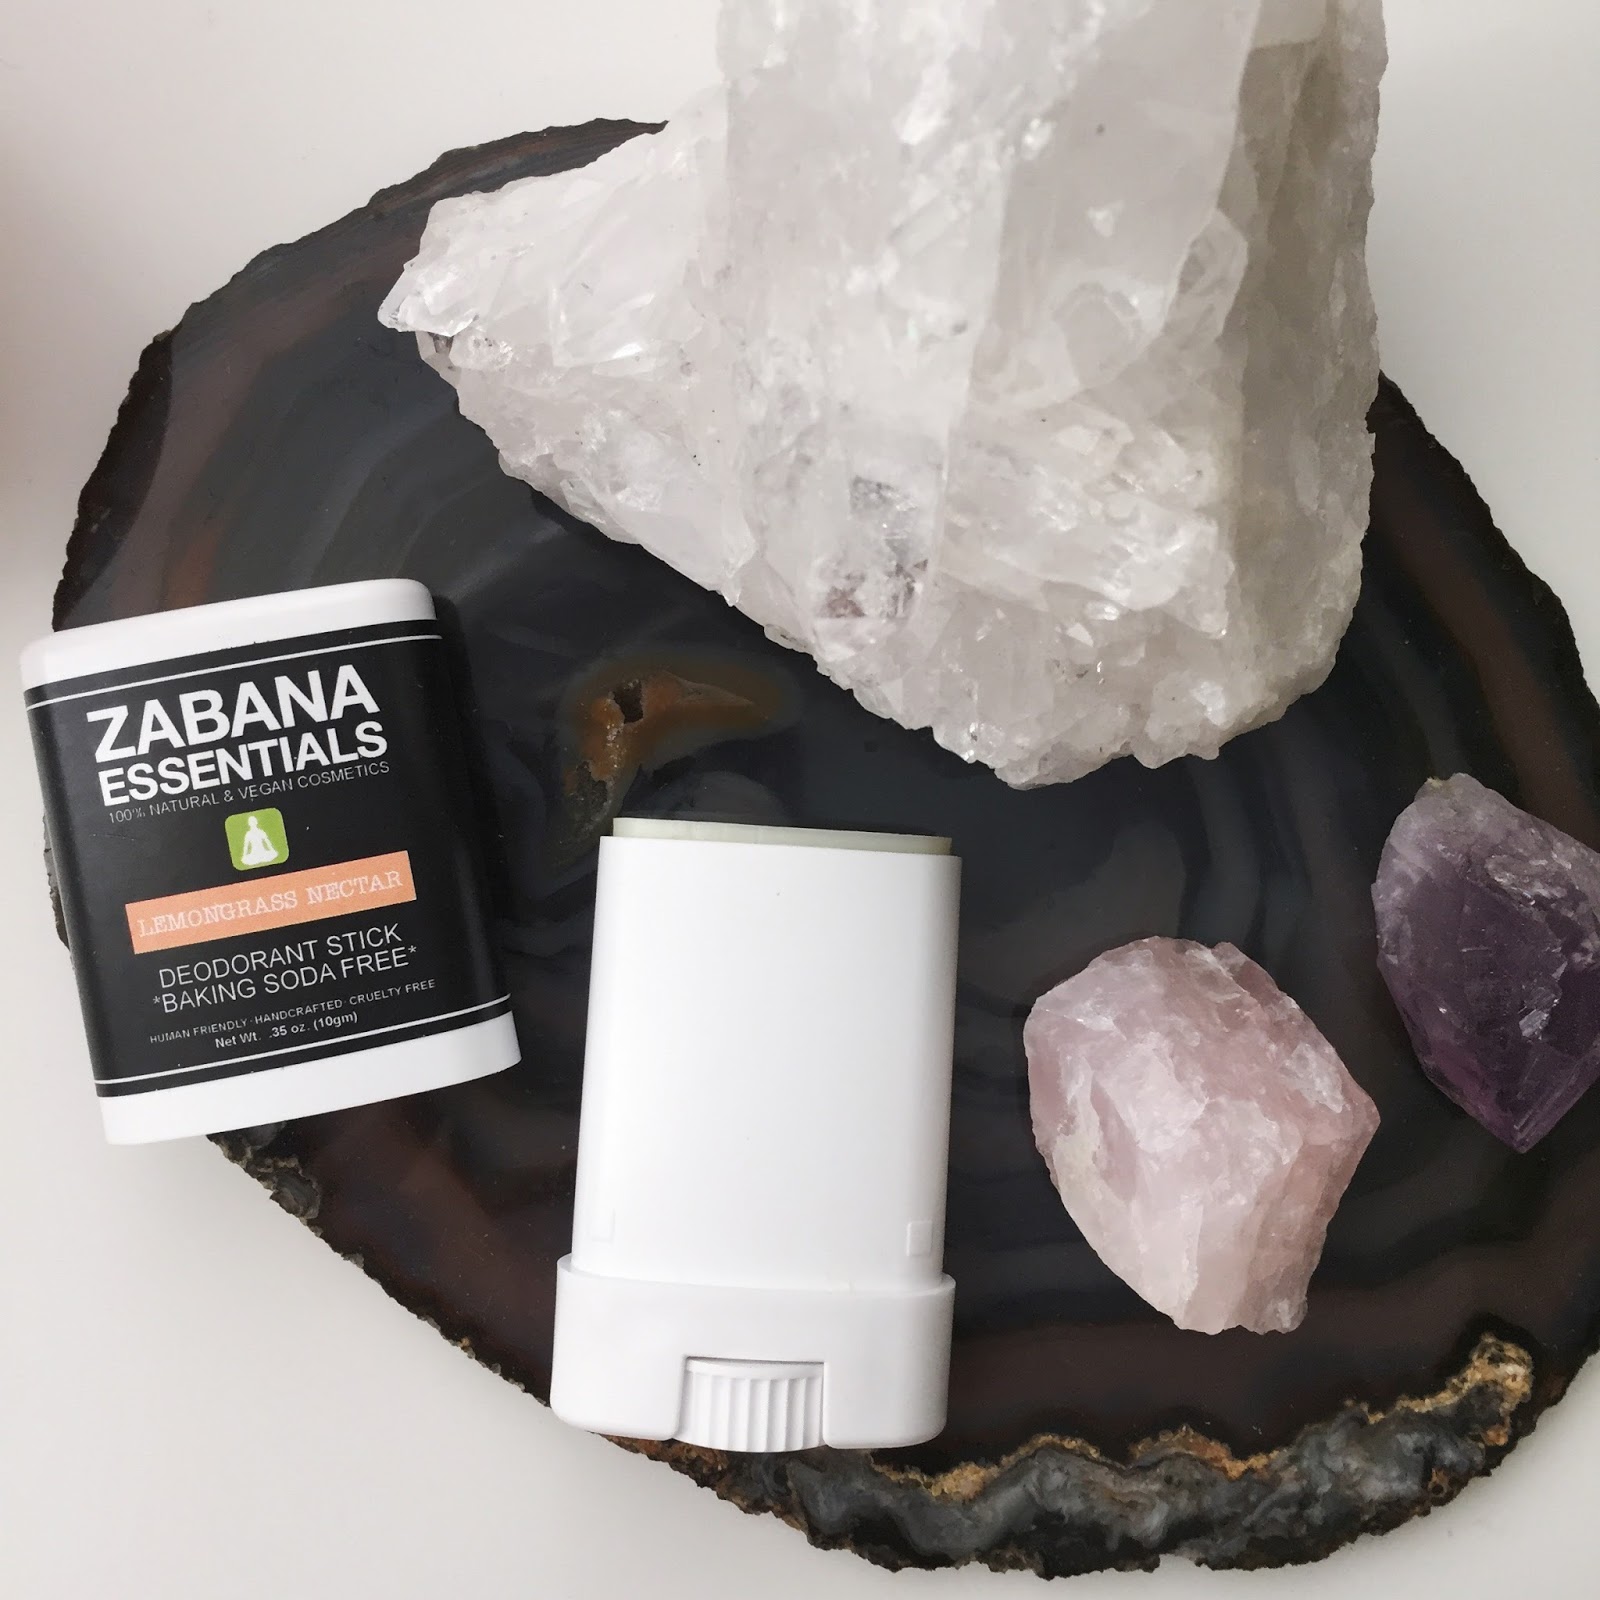 Zabana Essentials Baking Soda Free Deodorant and Armpit Bar Review